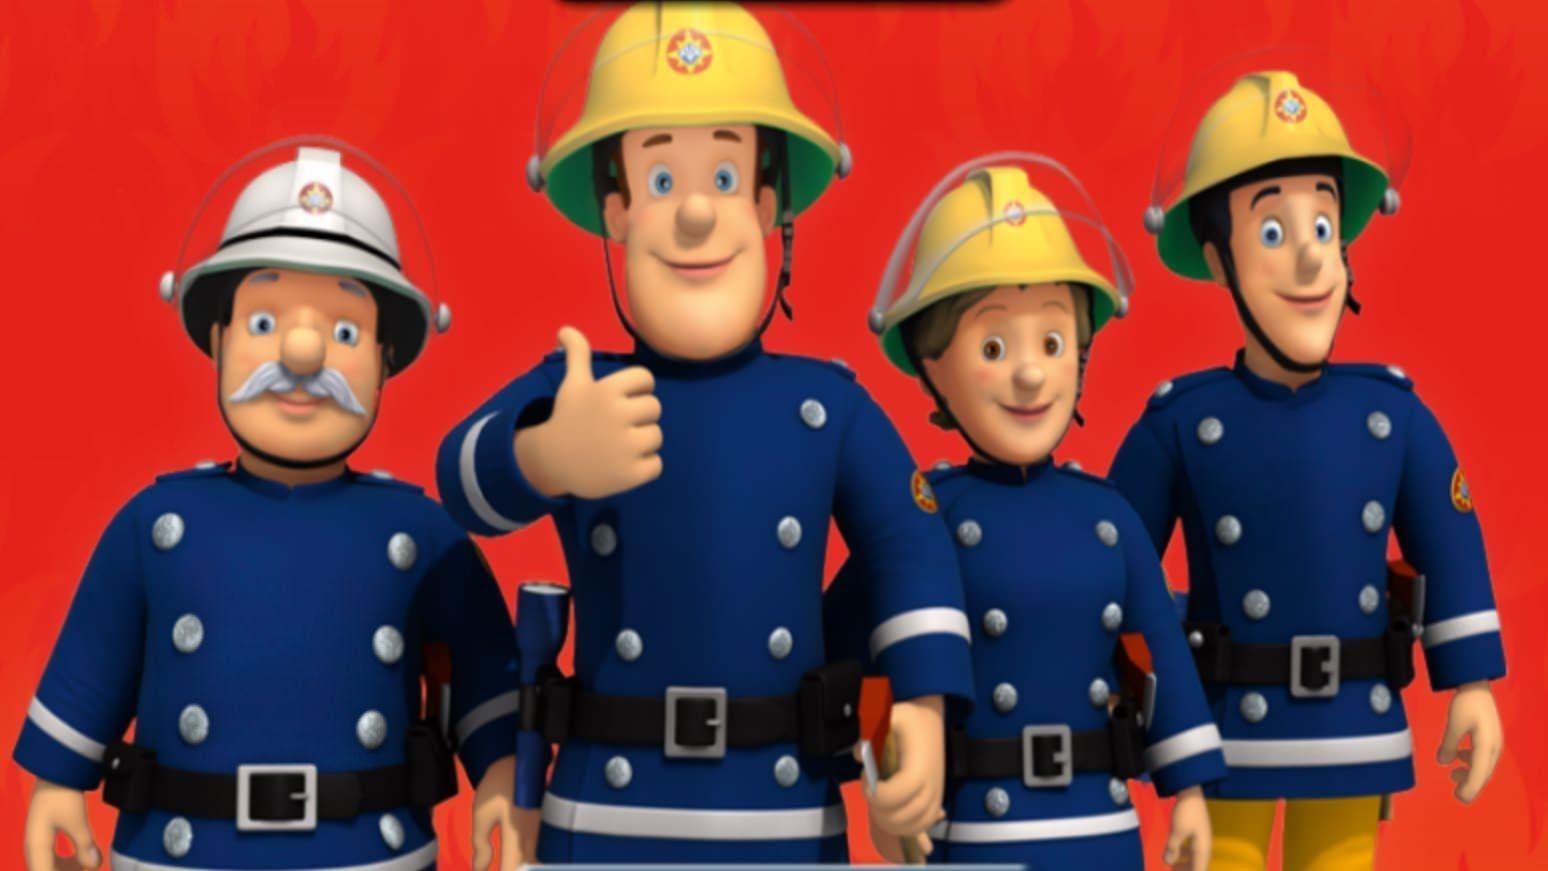 Fireman Sam: Junior Cadet Game for Kids